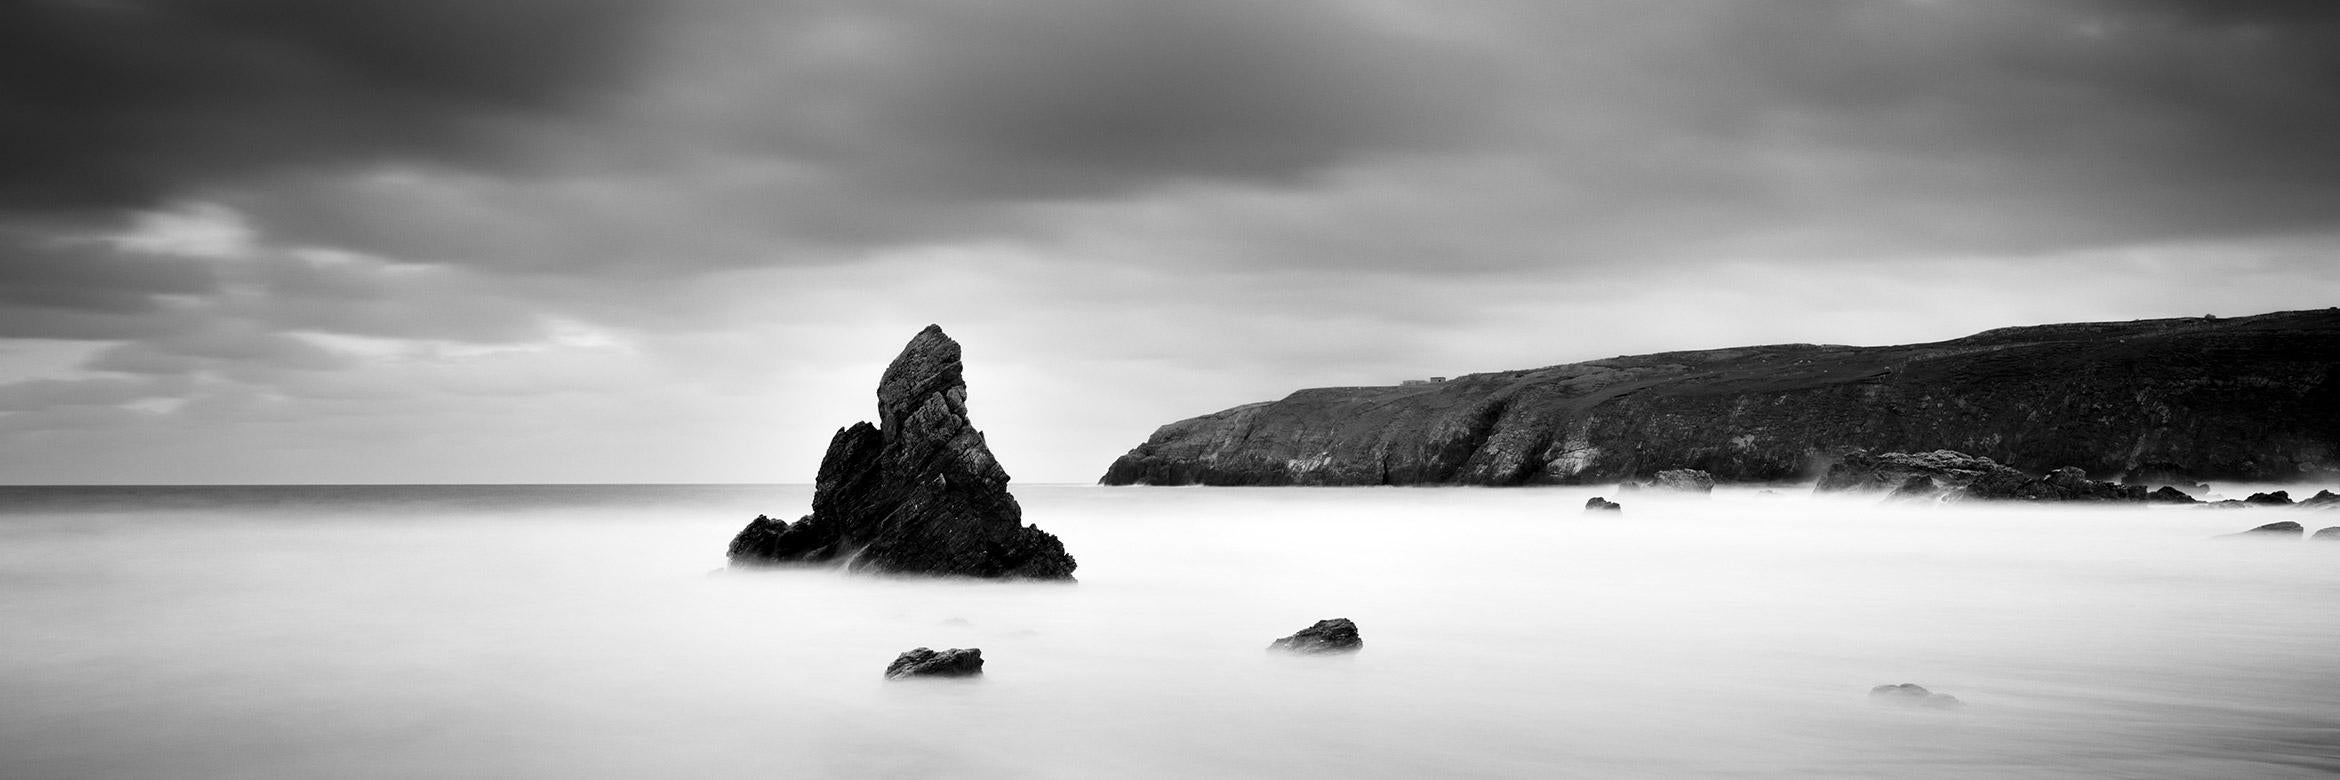 Gerald Berghammer Landscape Photograph - Sea Stack Panorama, shoreline, Scotland, black and white landscape photography